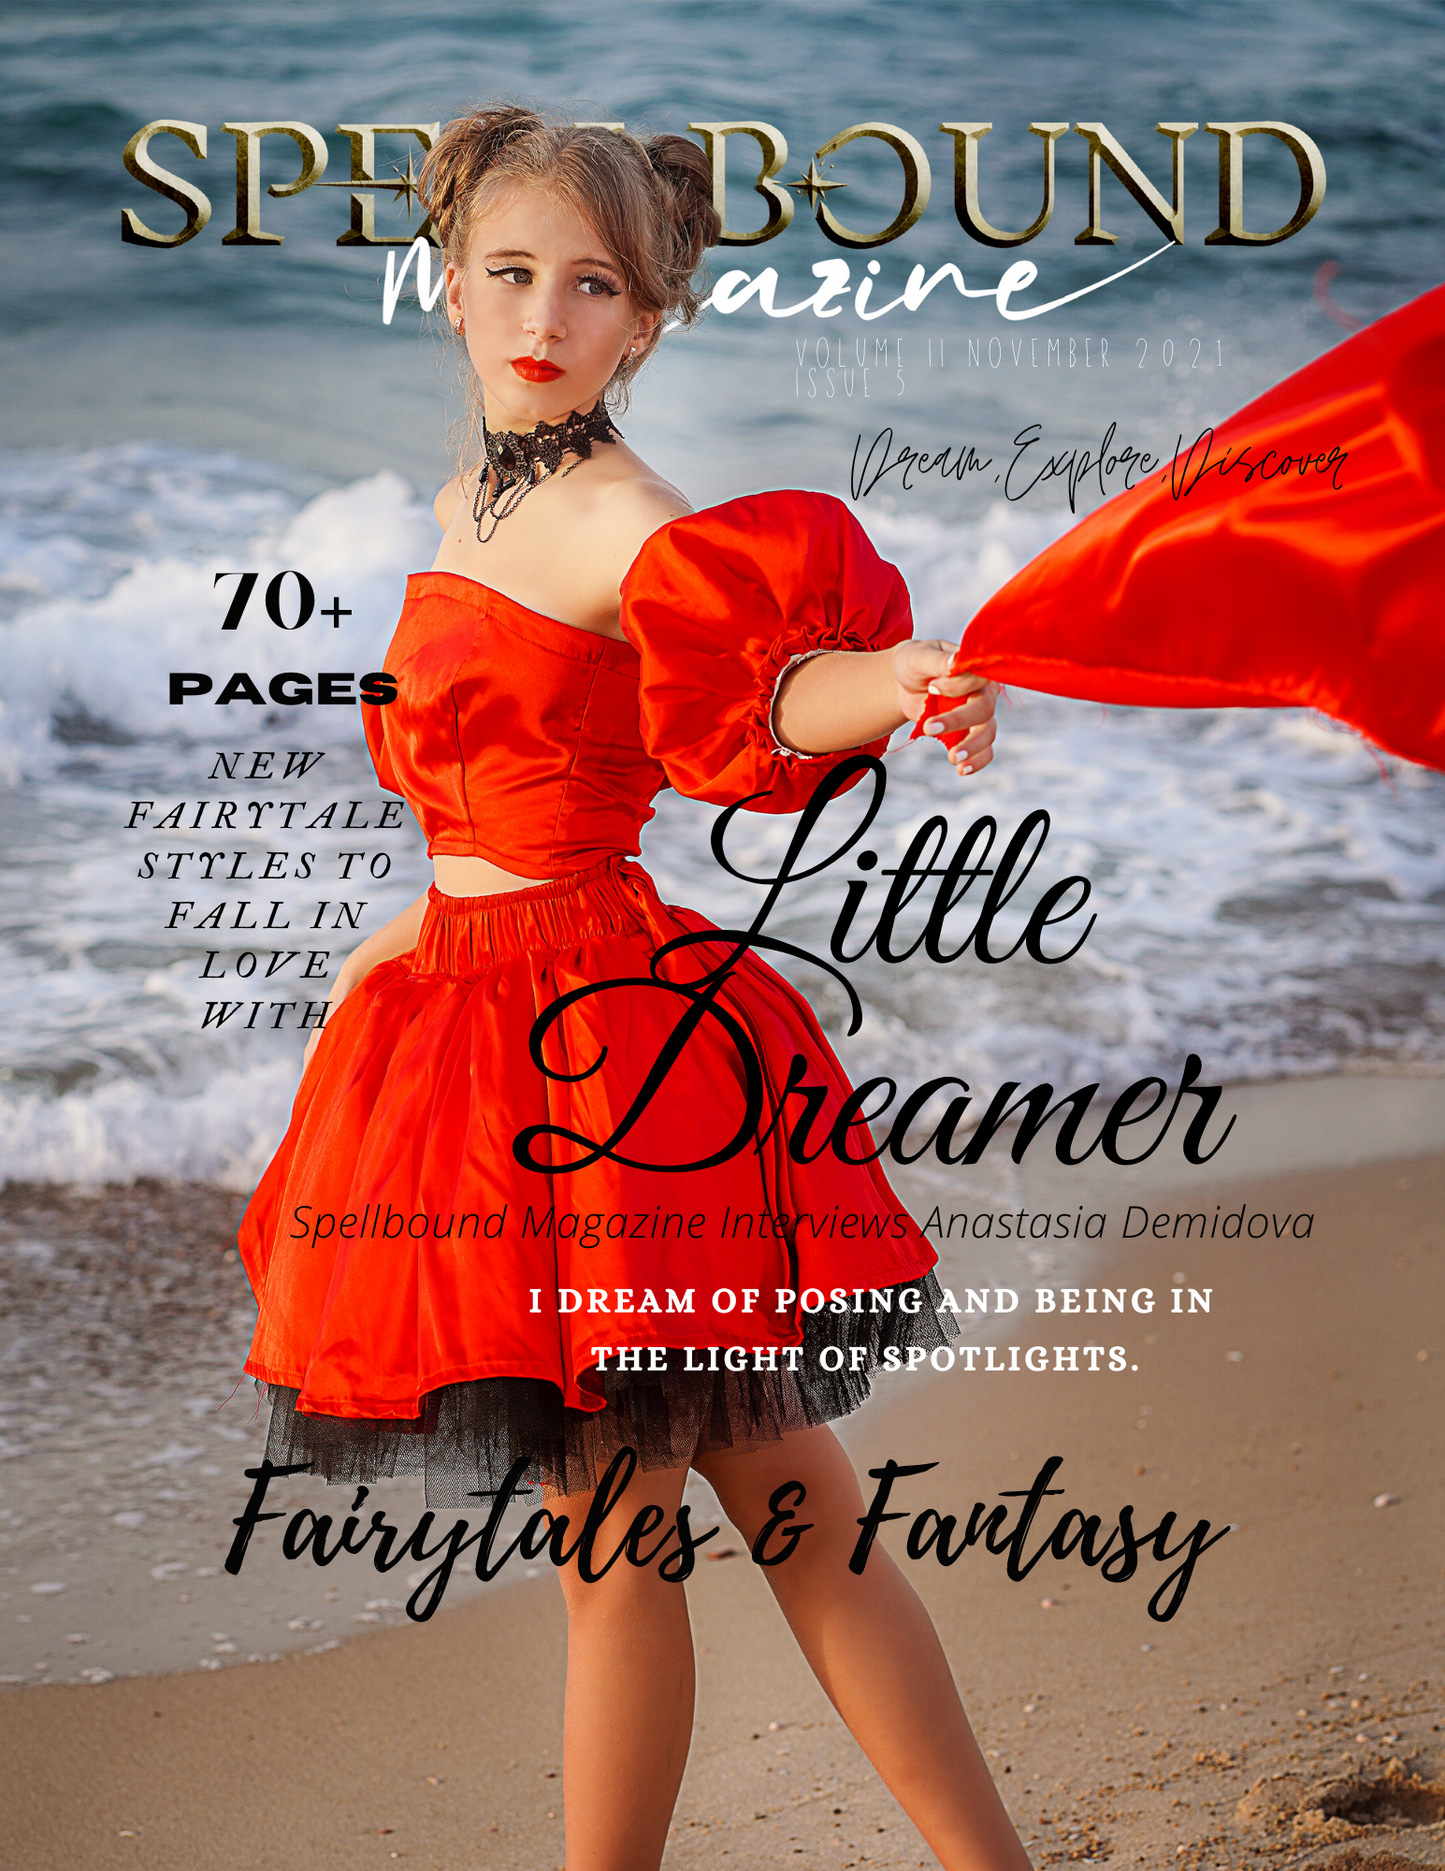 Spellbound Fairytales & Fantasy Magazine VOL II Issue 5